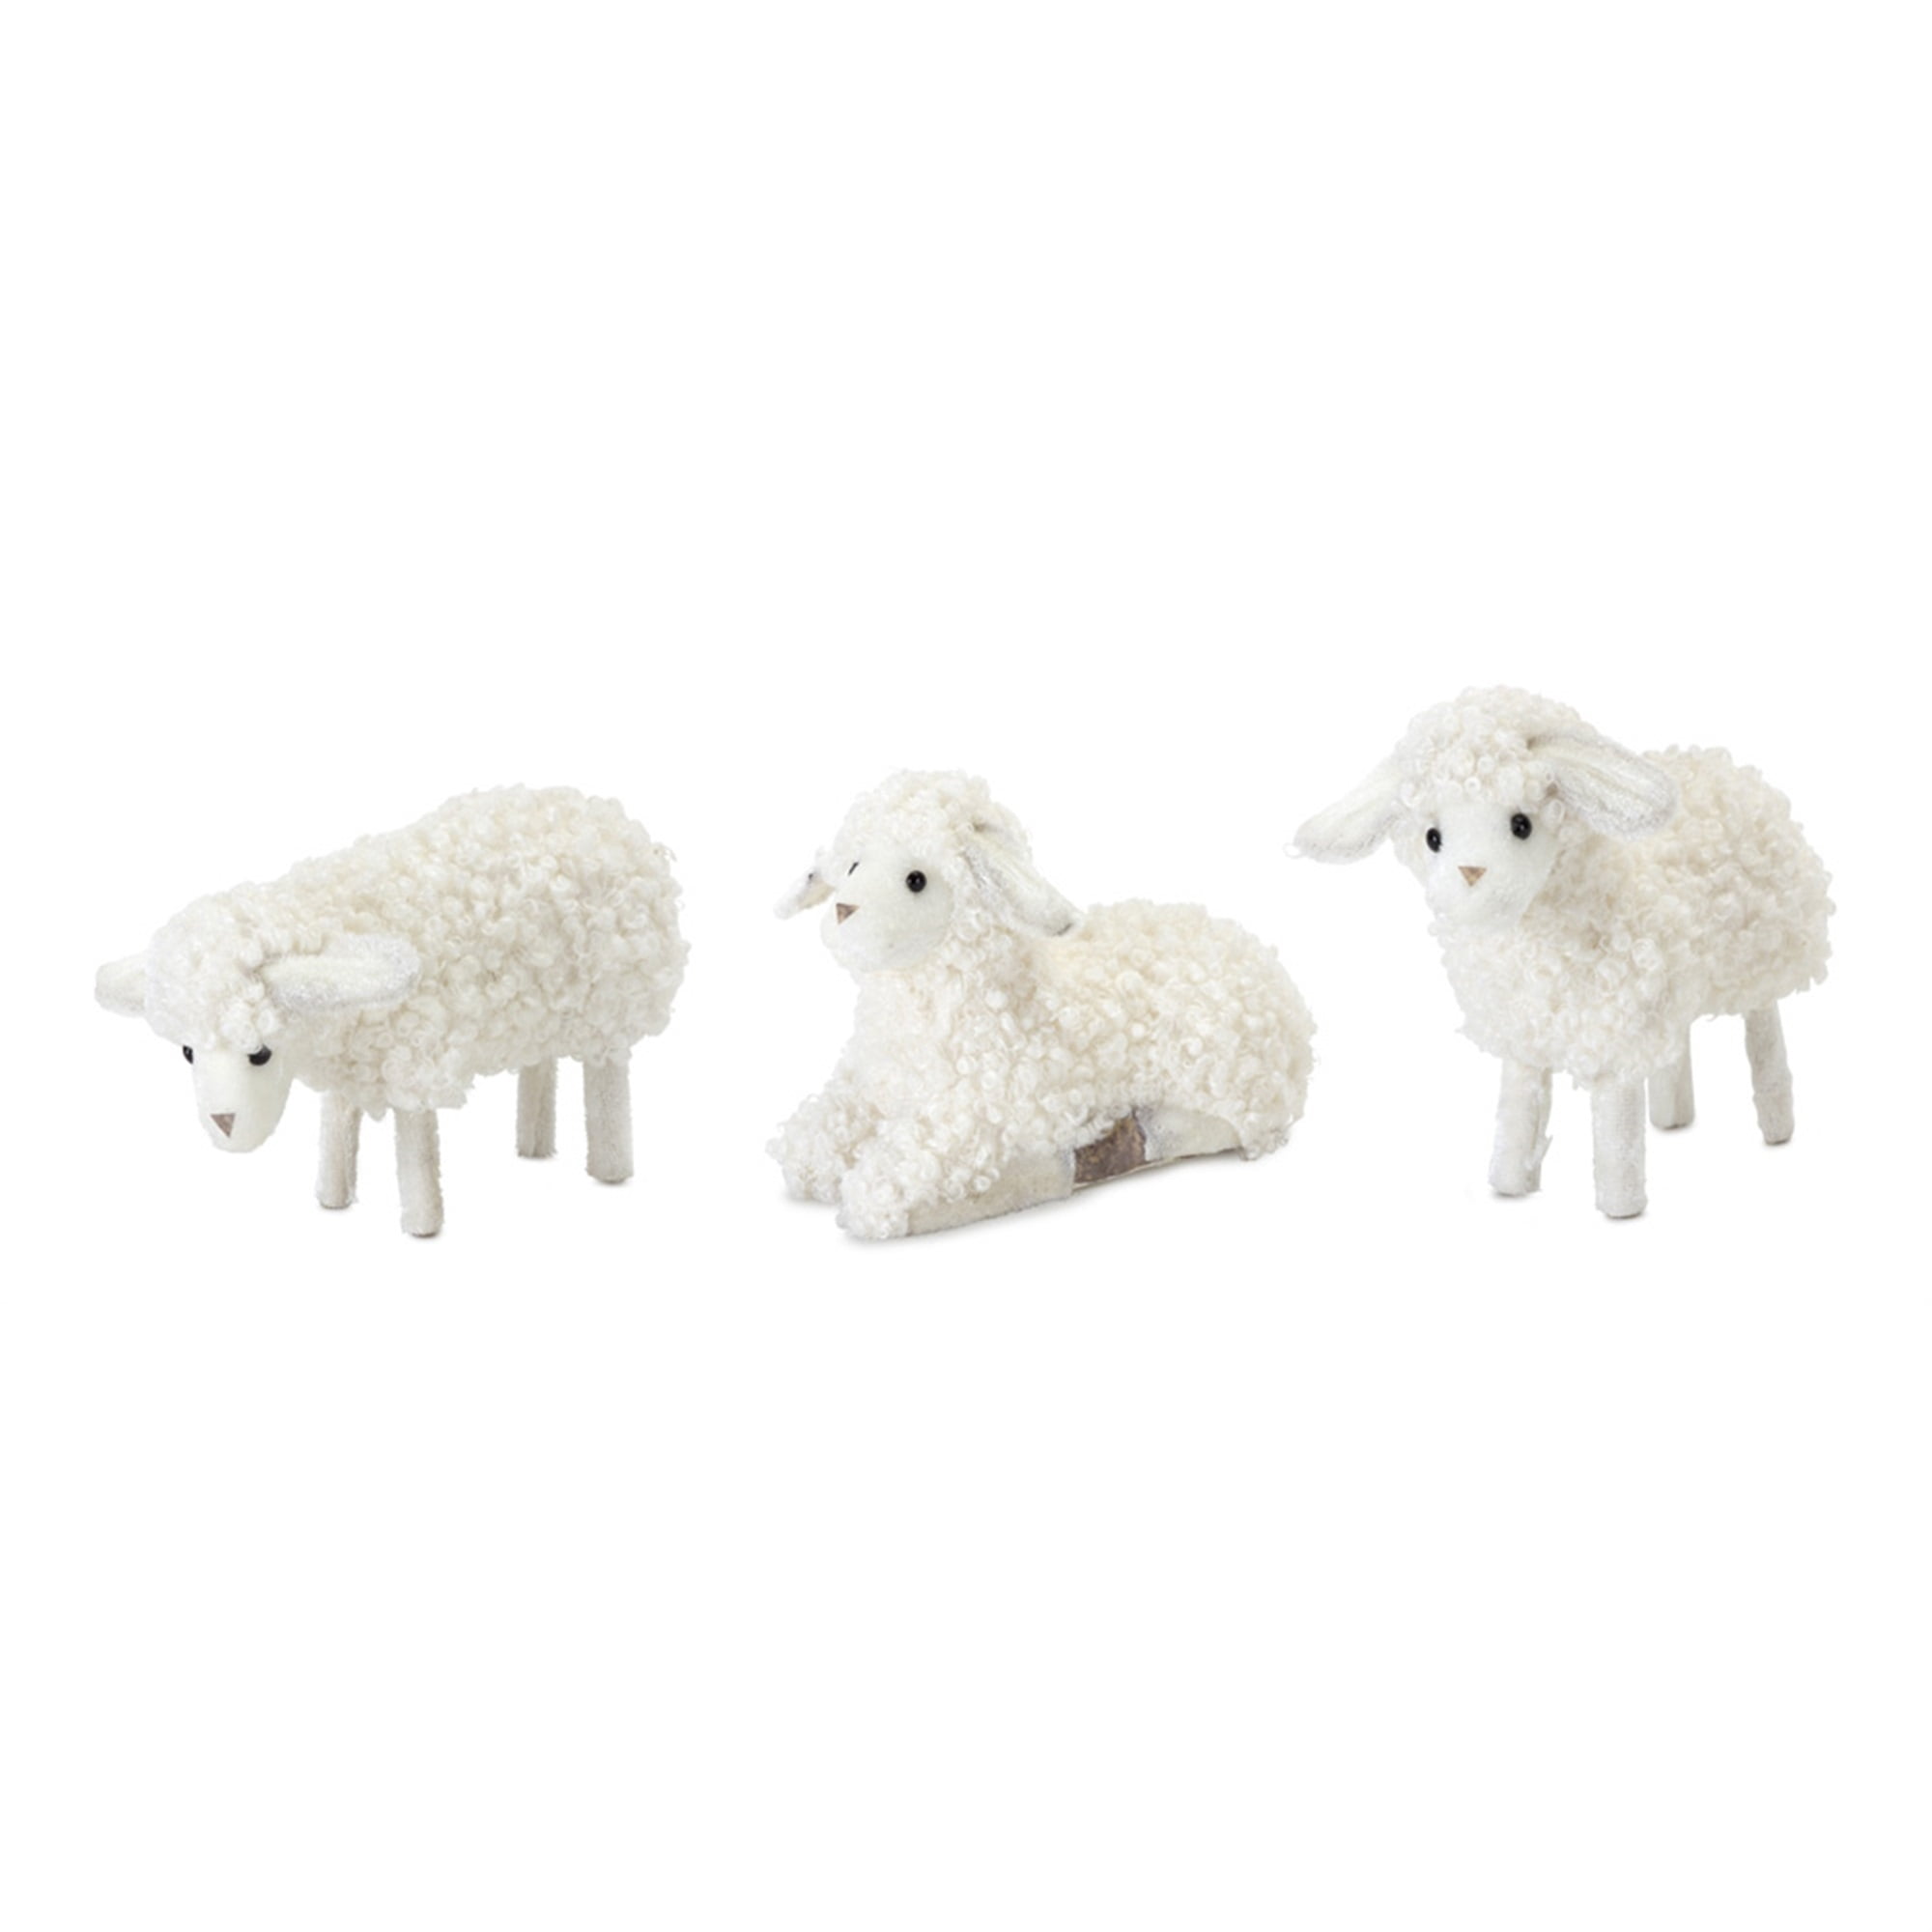 Lamb (Set of 24) 3"H, 3.5"H, 4"H Polyester/Foam